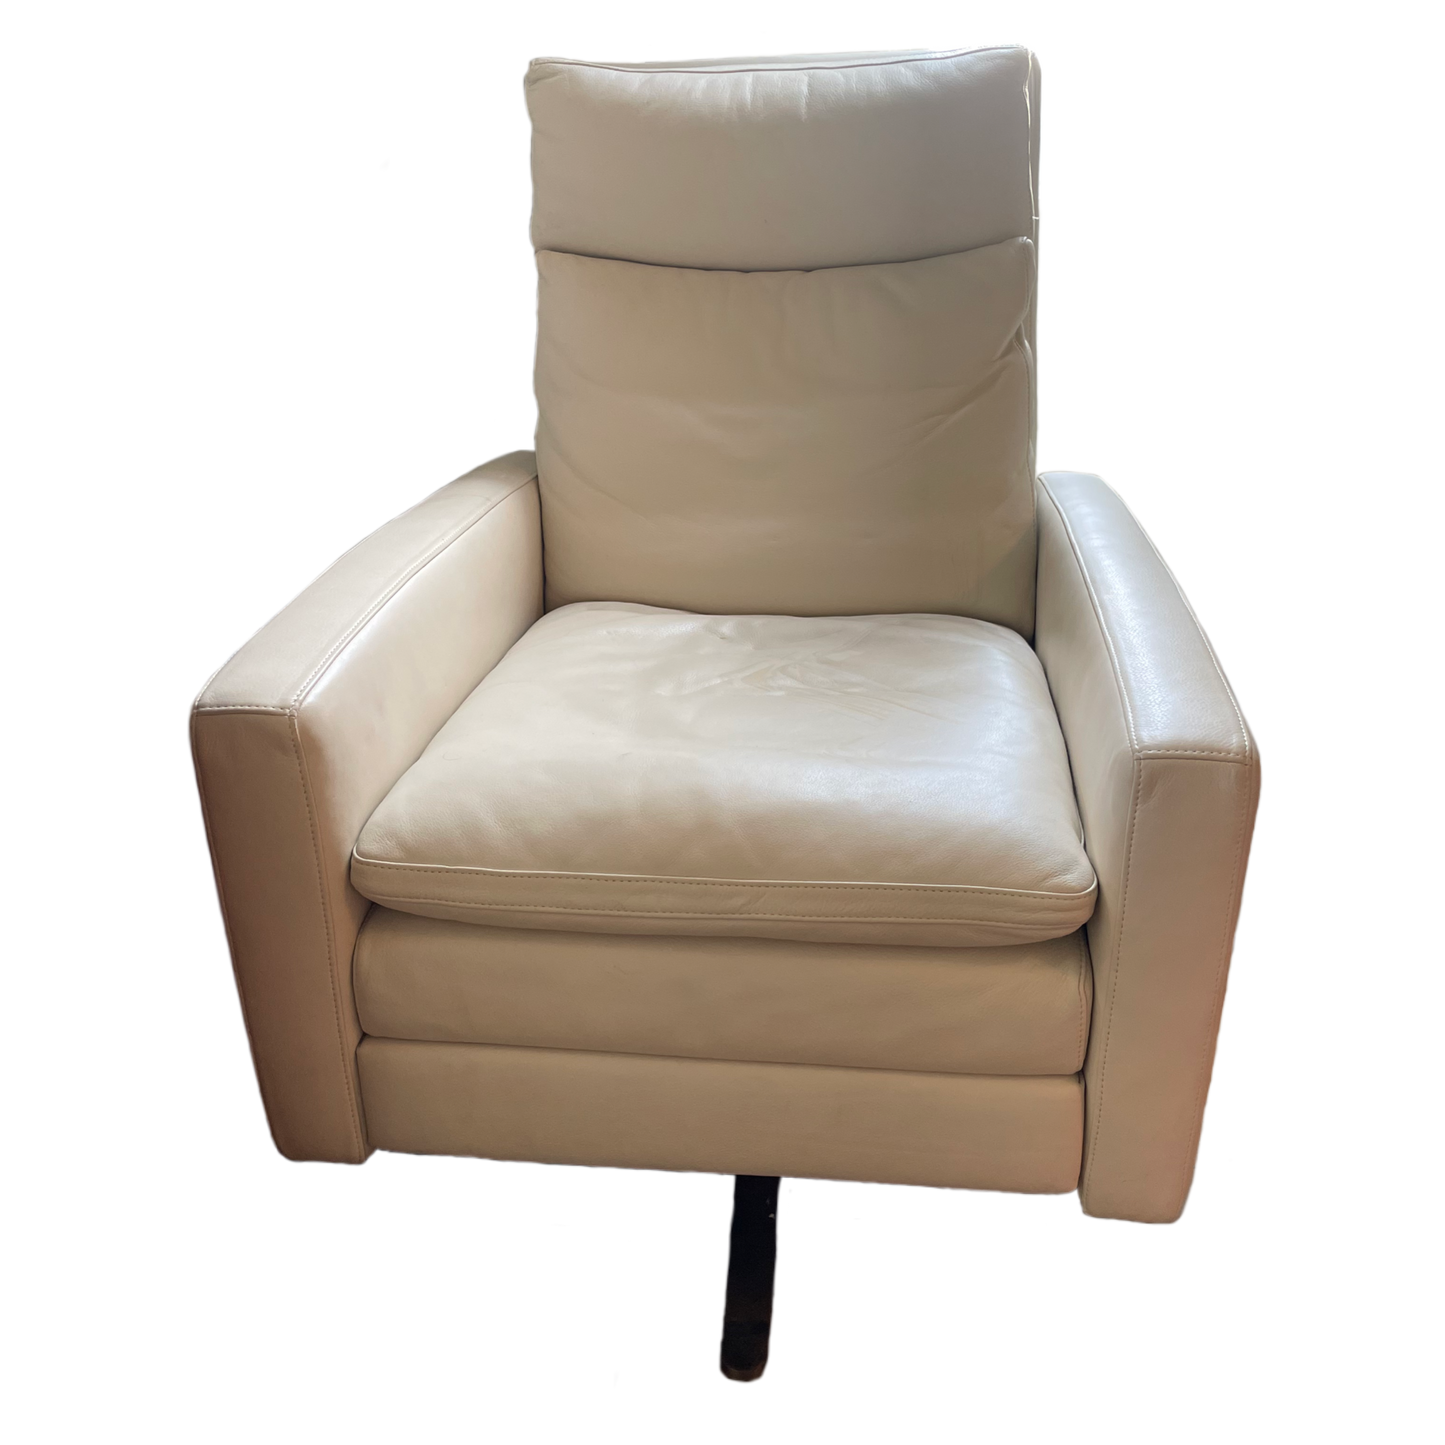 Cream Leather Recliner Armchair